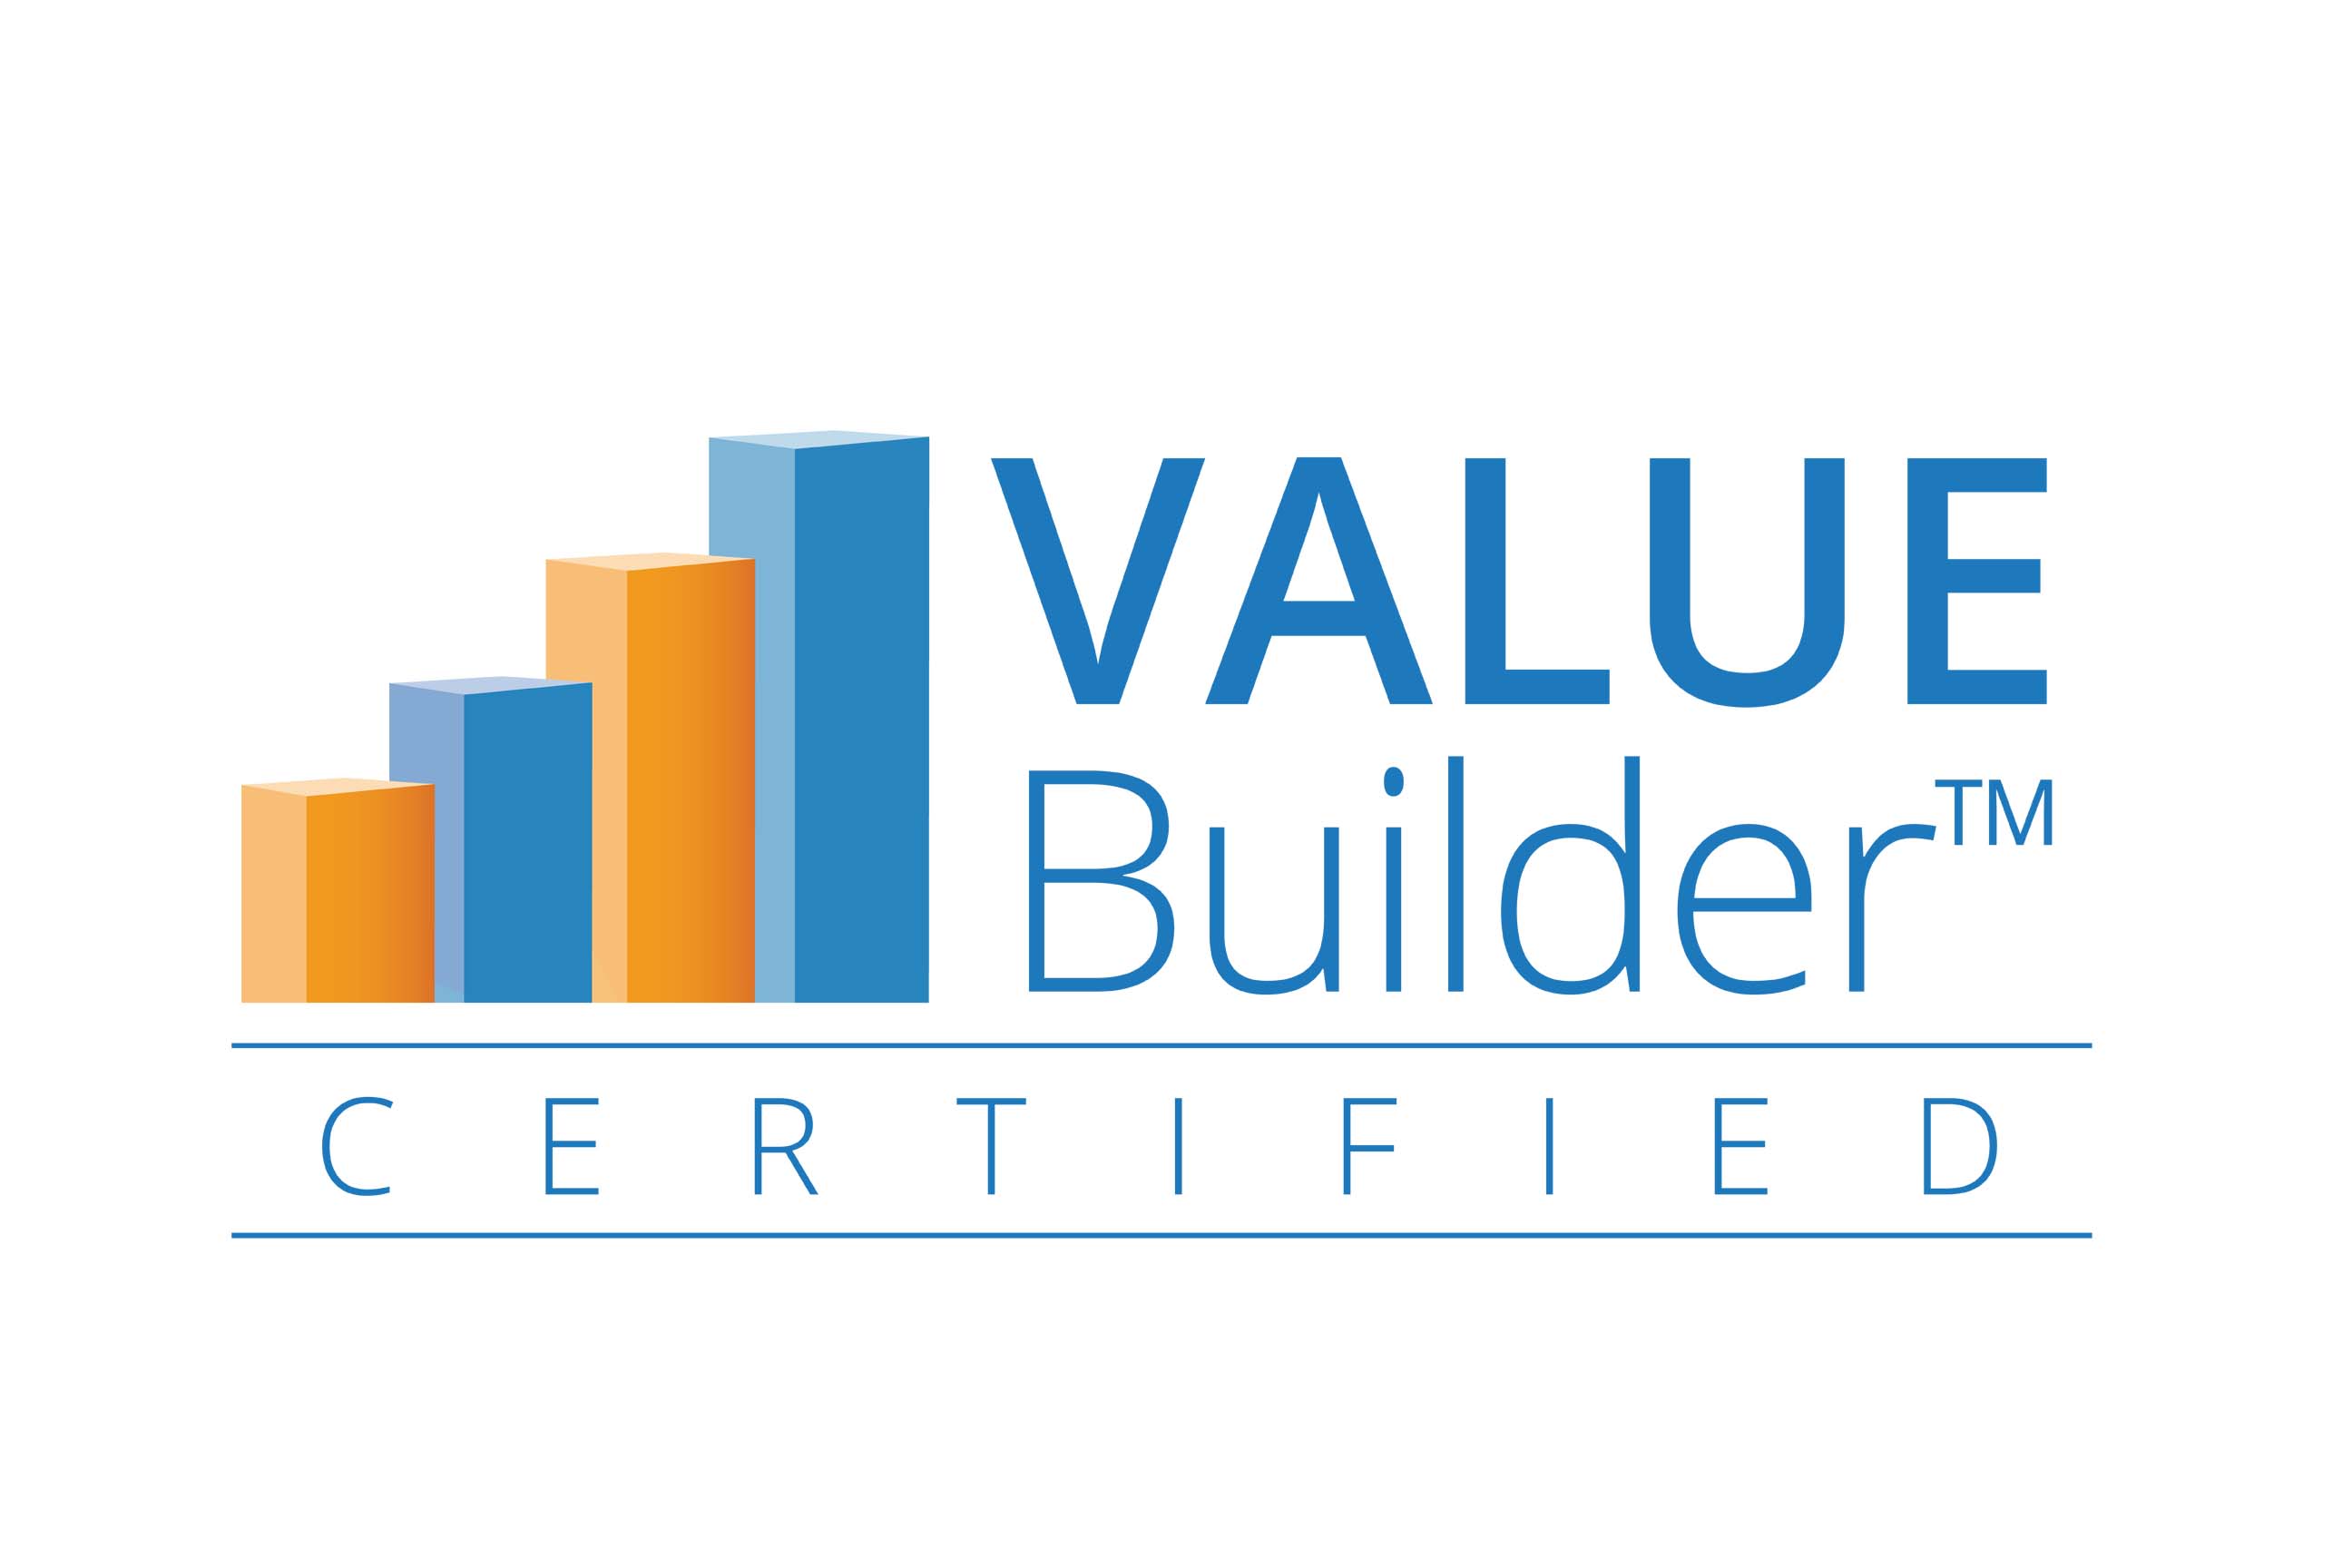 Certified Value Builder